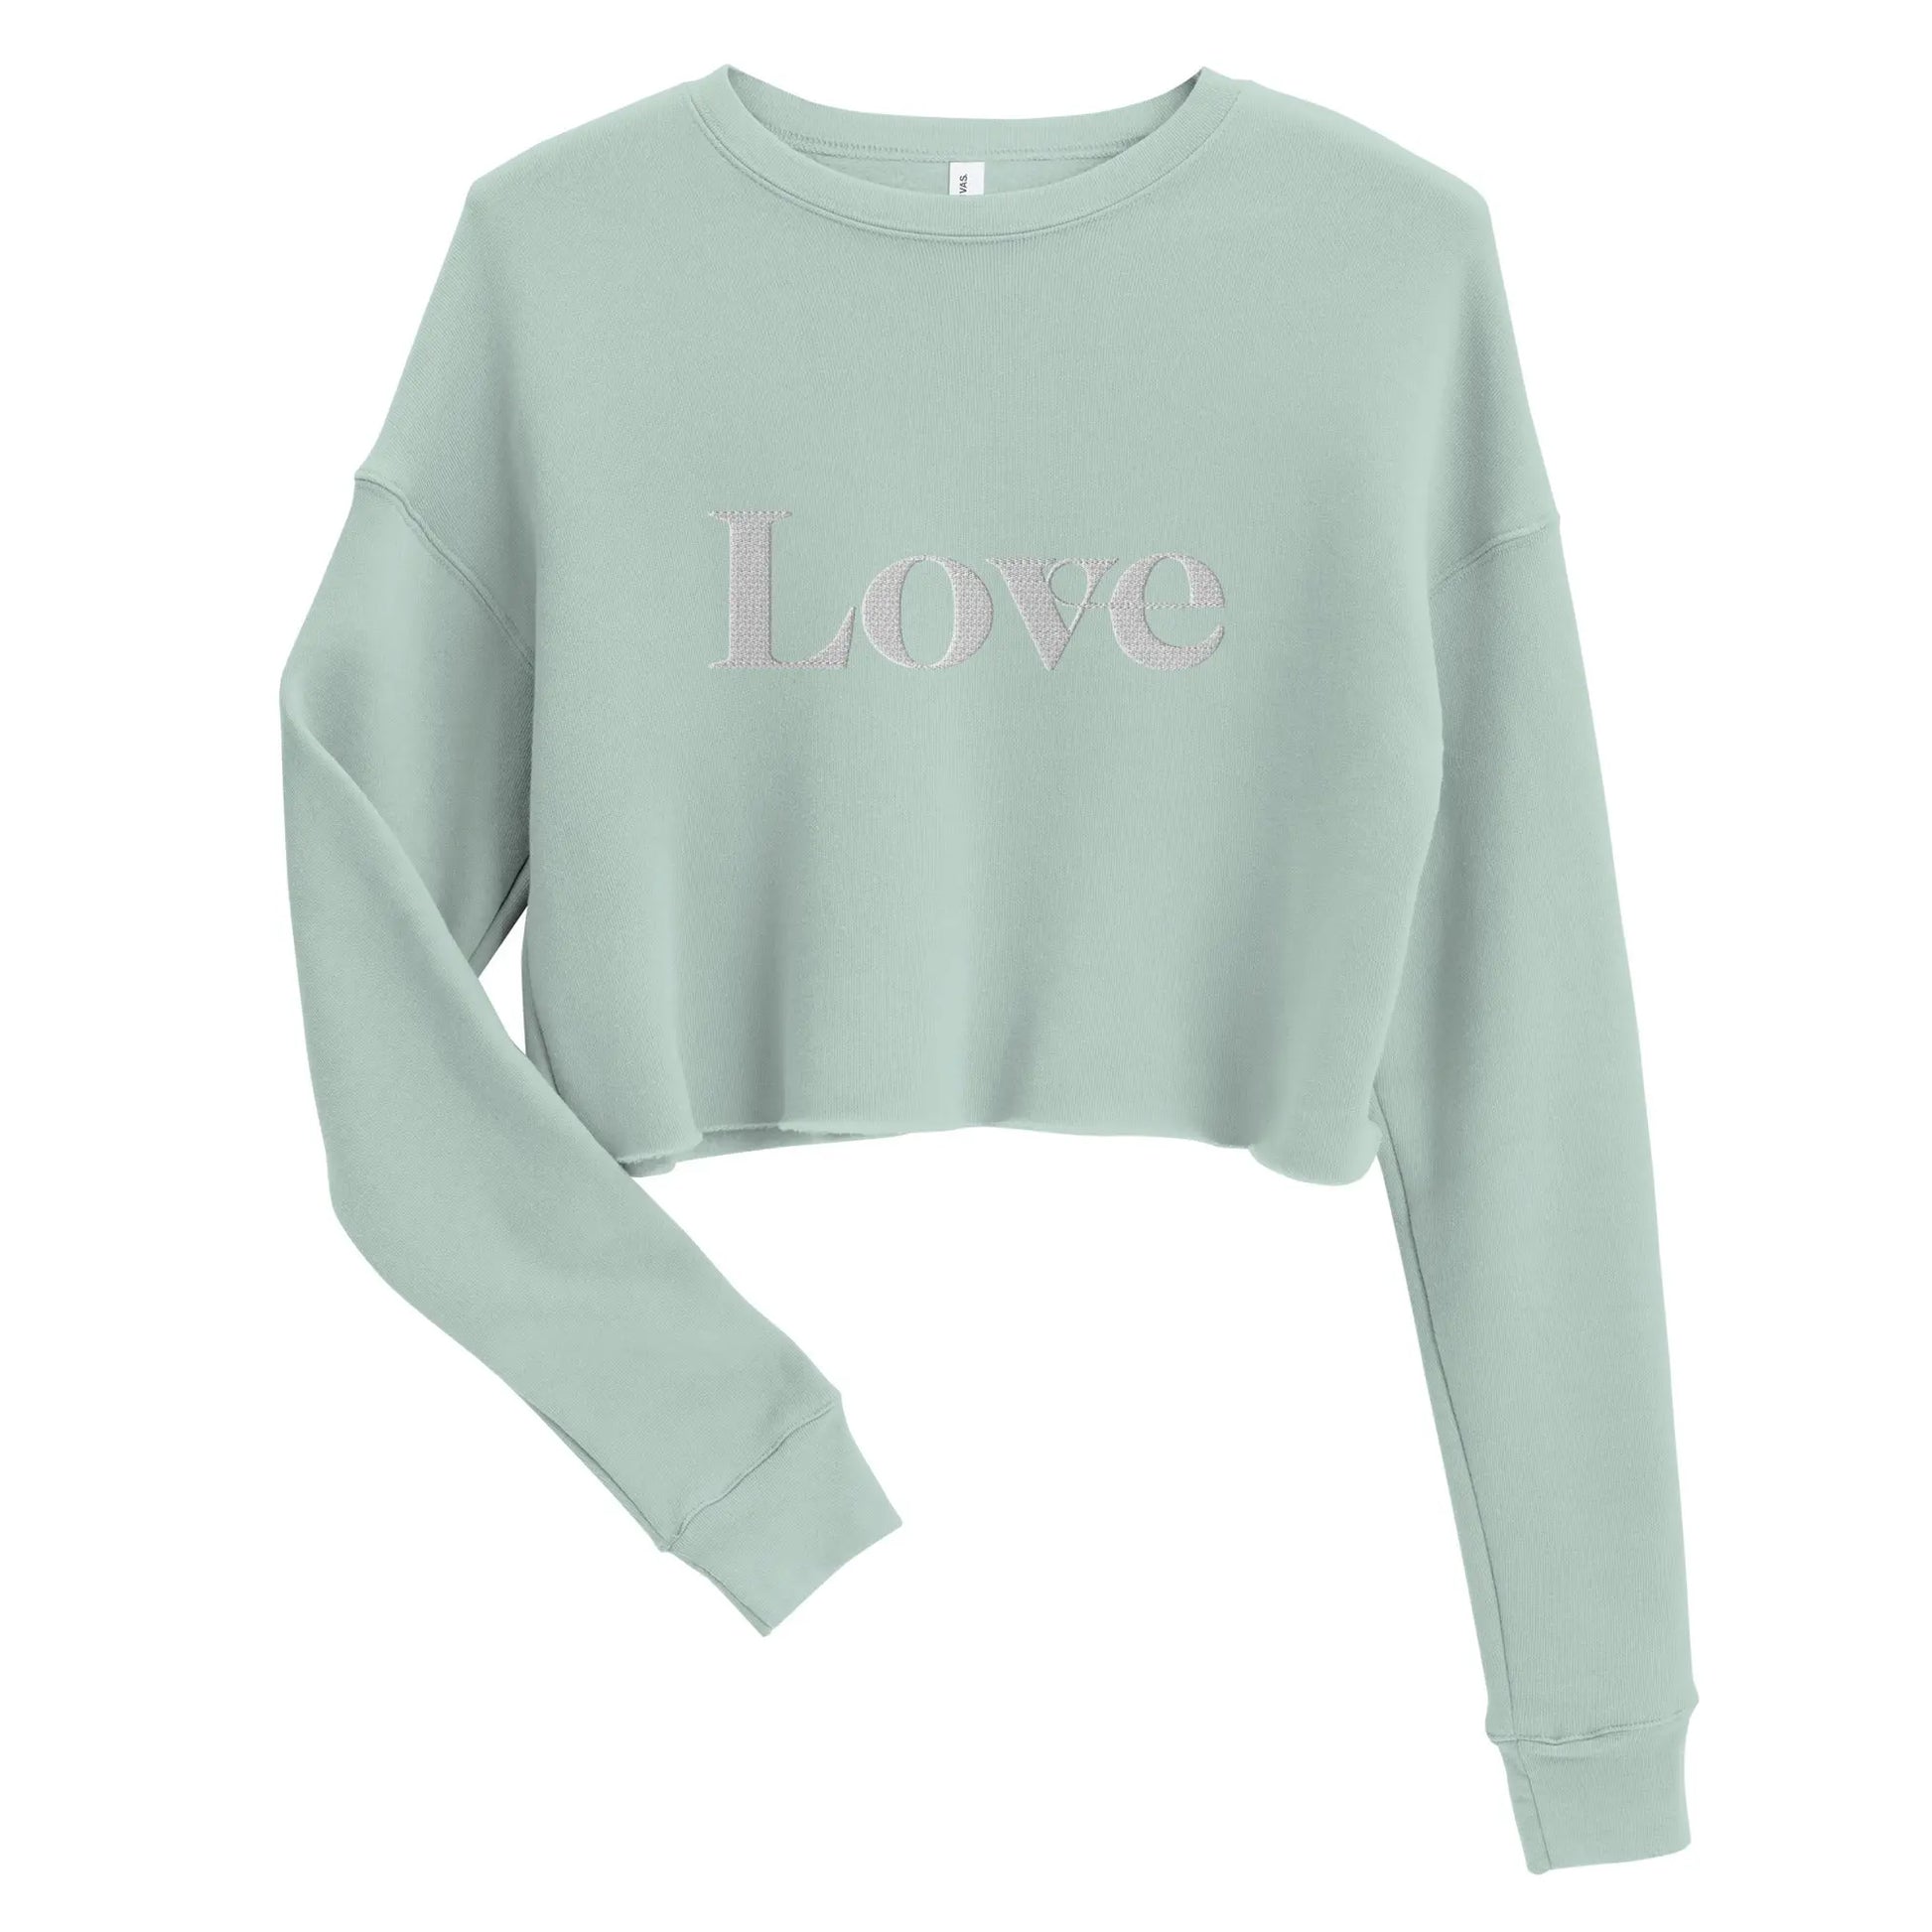 Cropped Love Cozy Sweatshirt Ellie Day Activewear